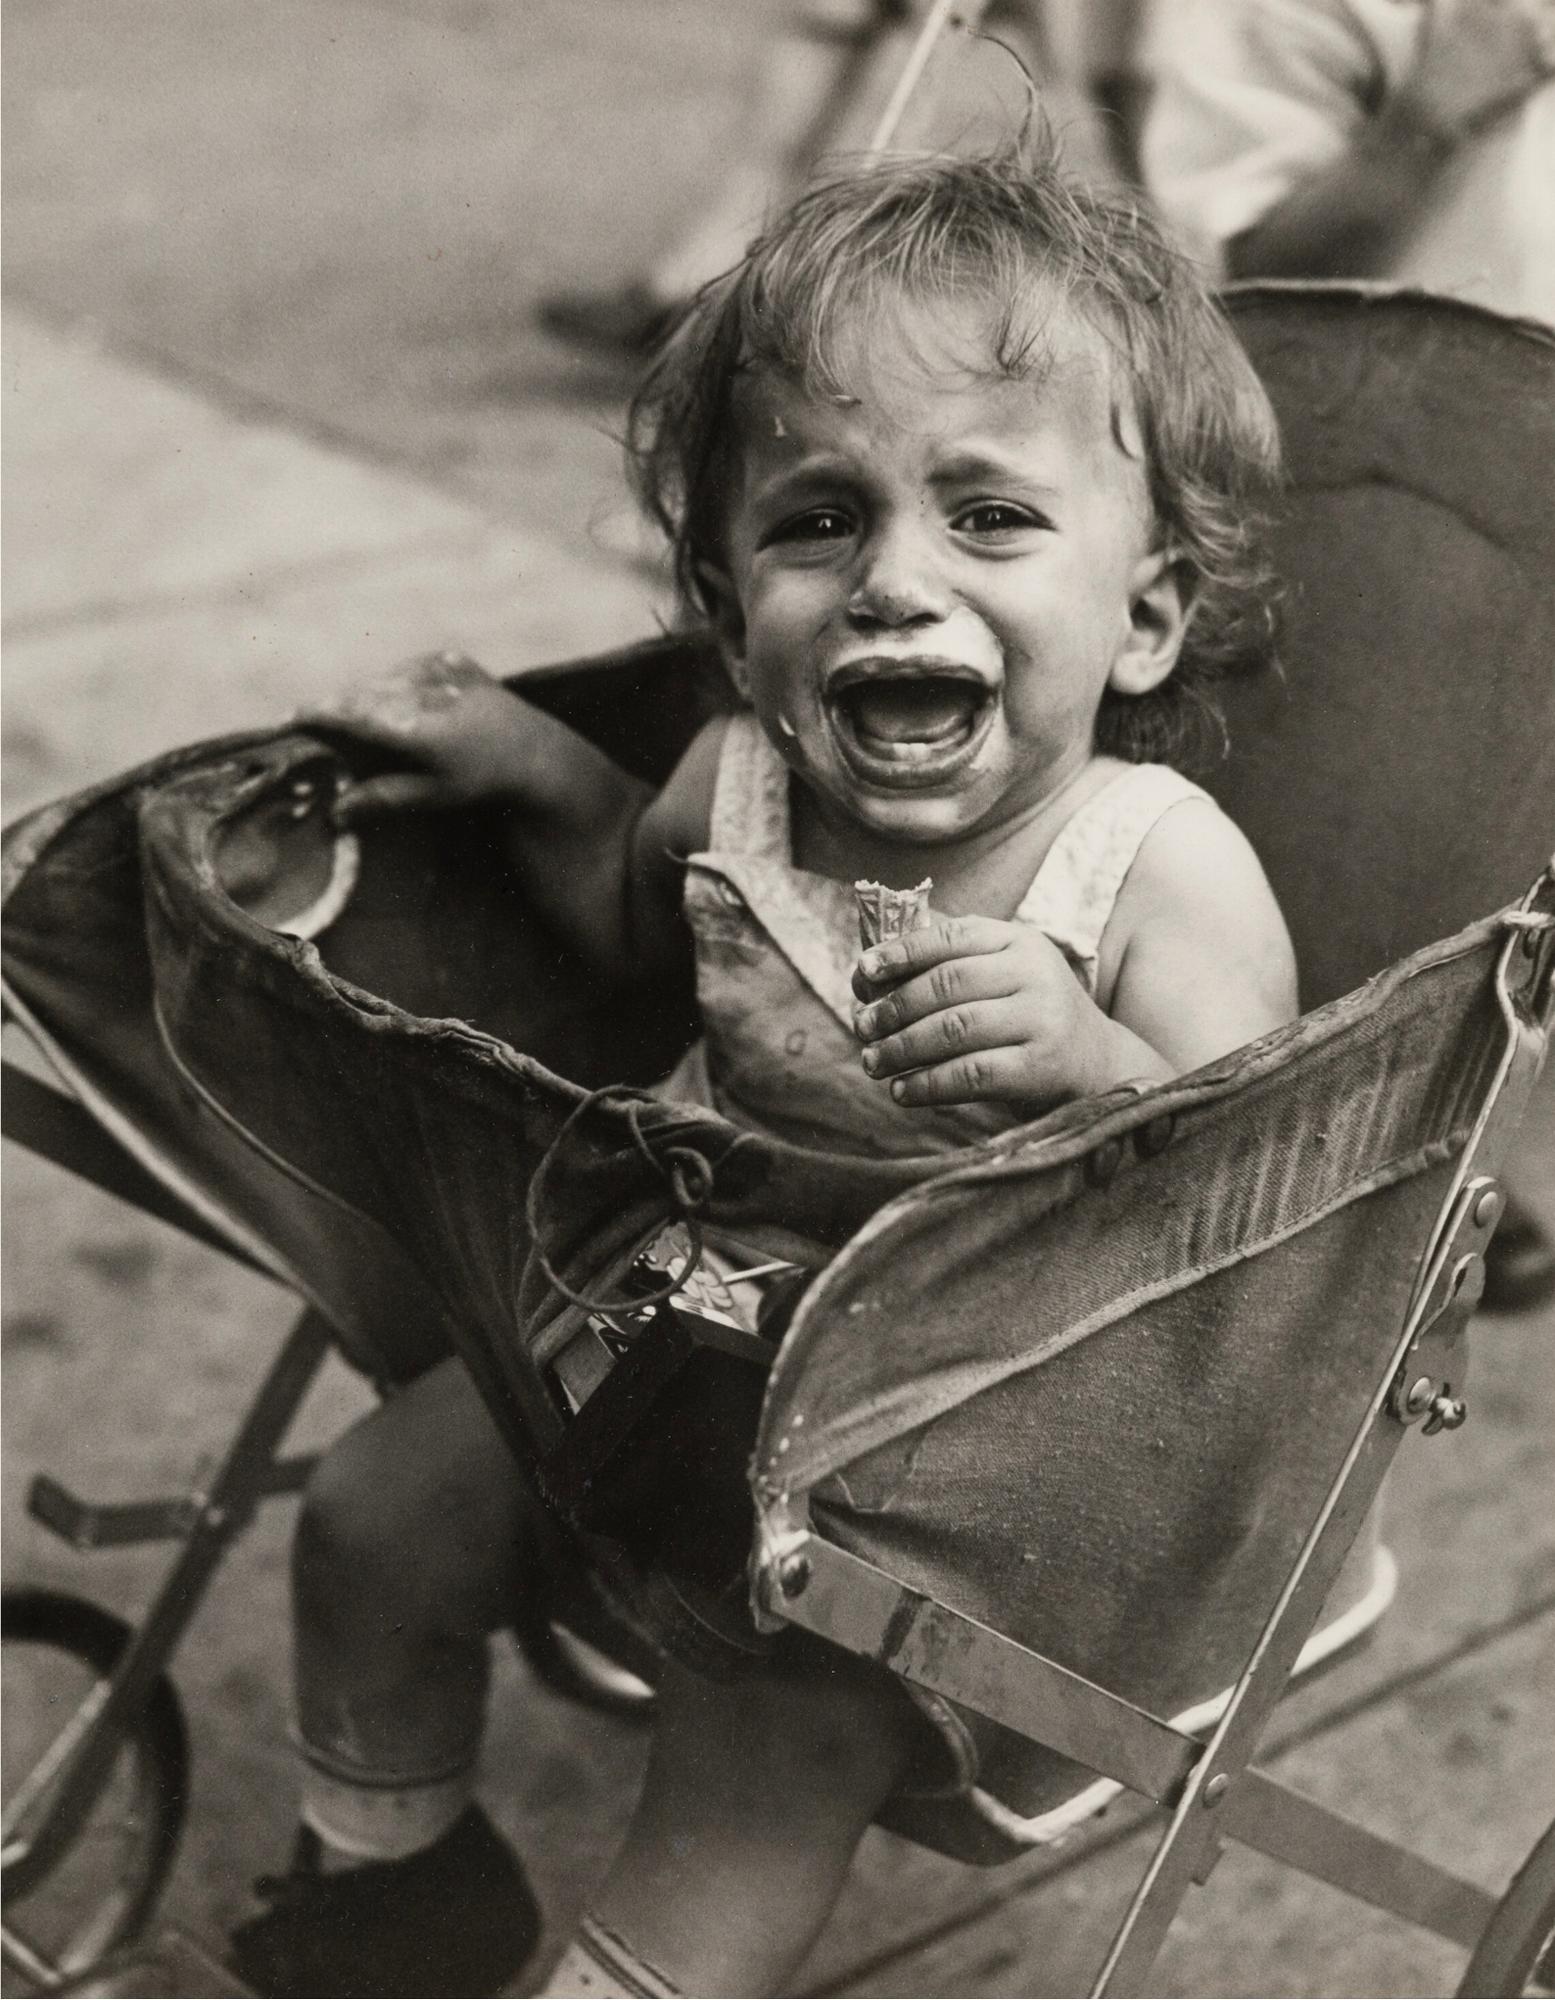 Vivian Maier Portrait Photograph - Crying Child in Stroller,  Vintage Print  - Female Street Photographer